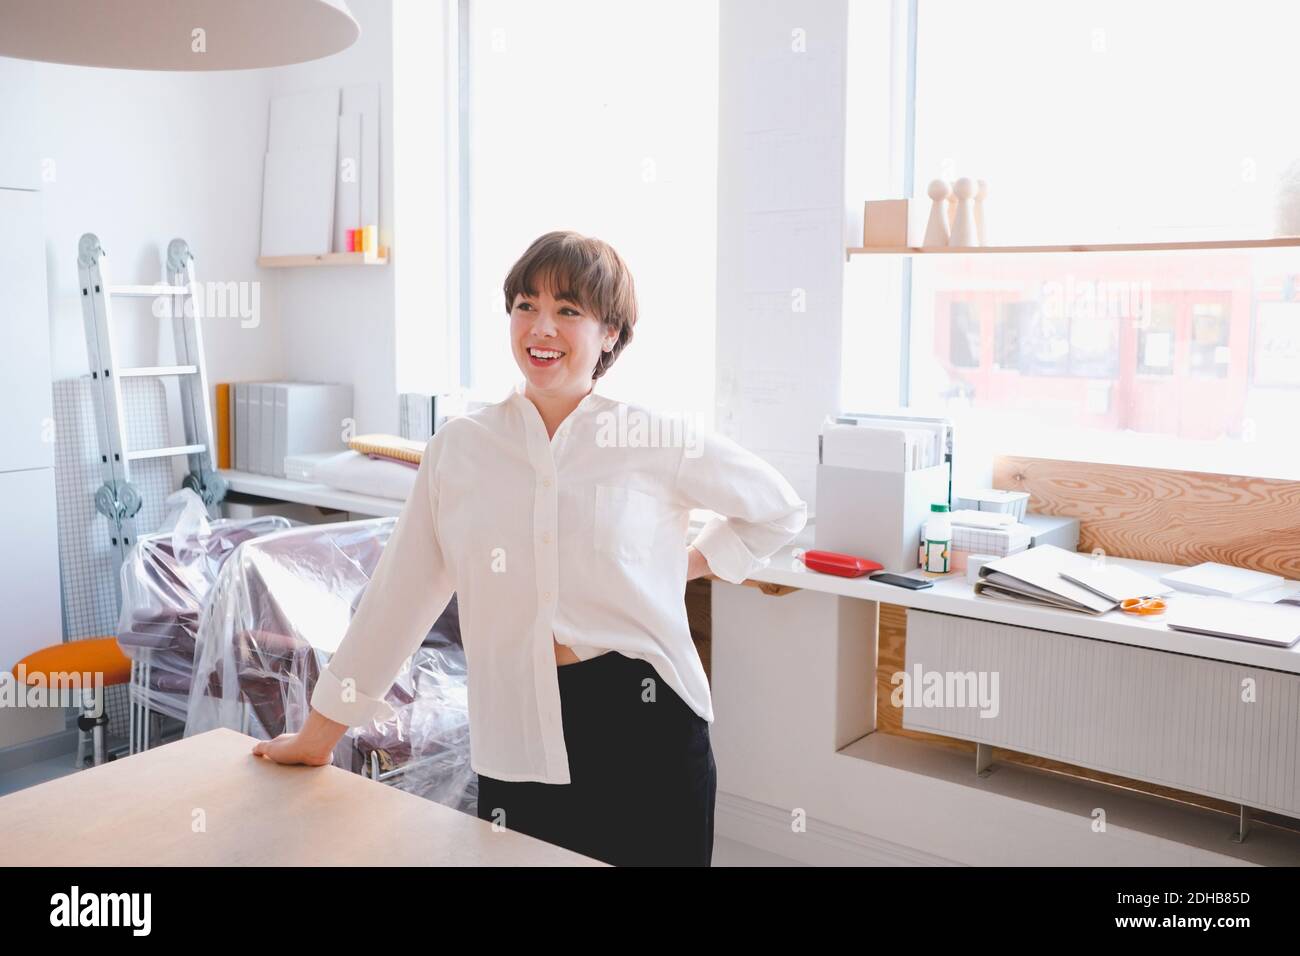 Smiling female design professional standing at desk in workshop Stock Photo